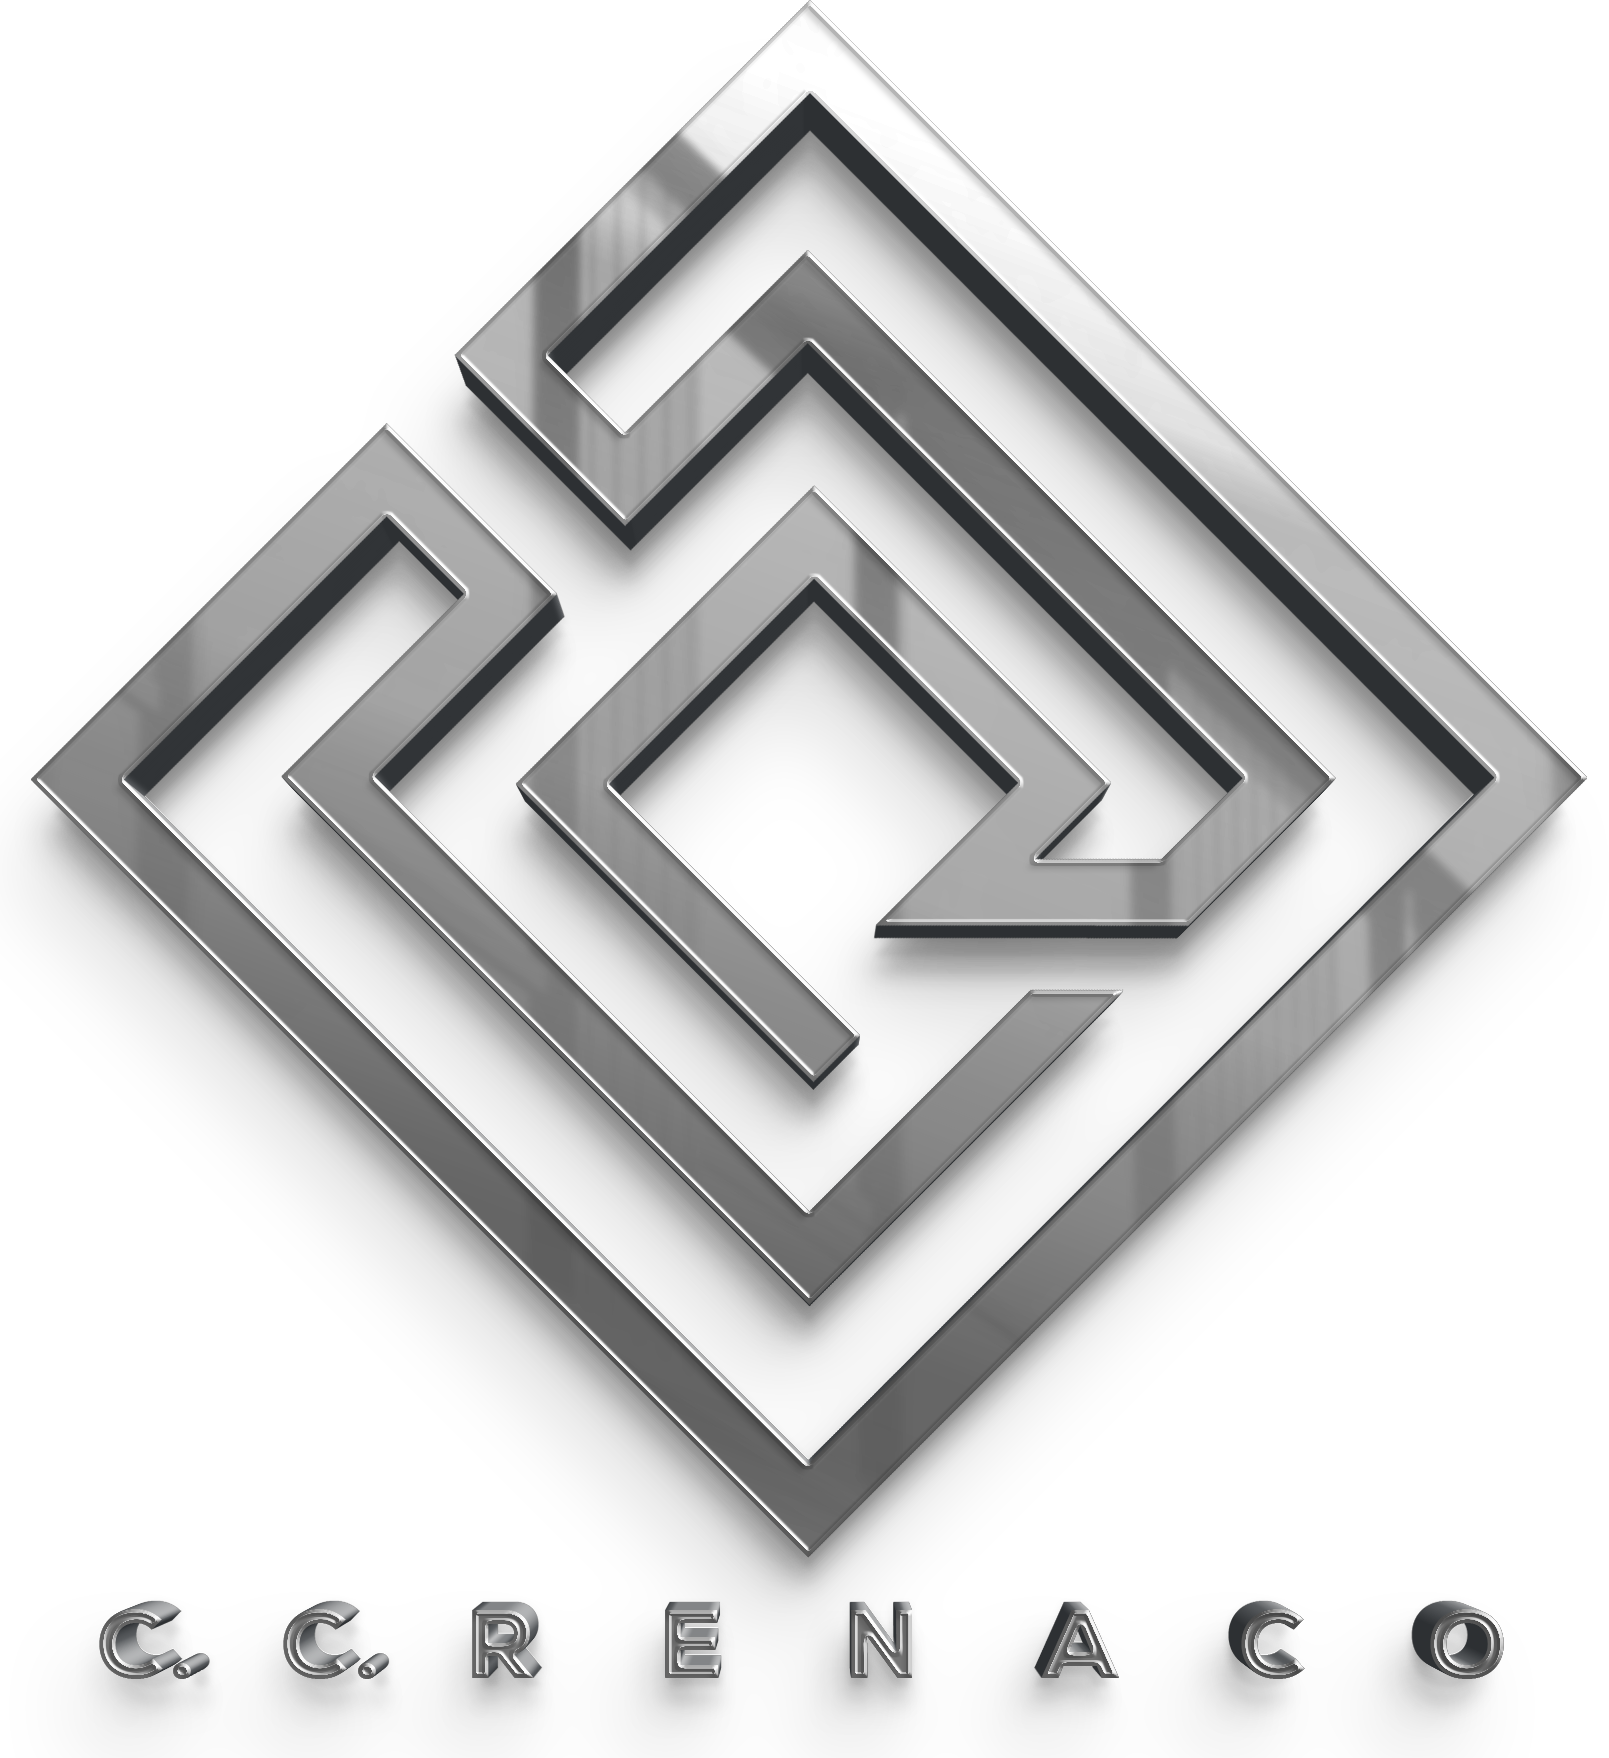 CC Renaco